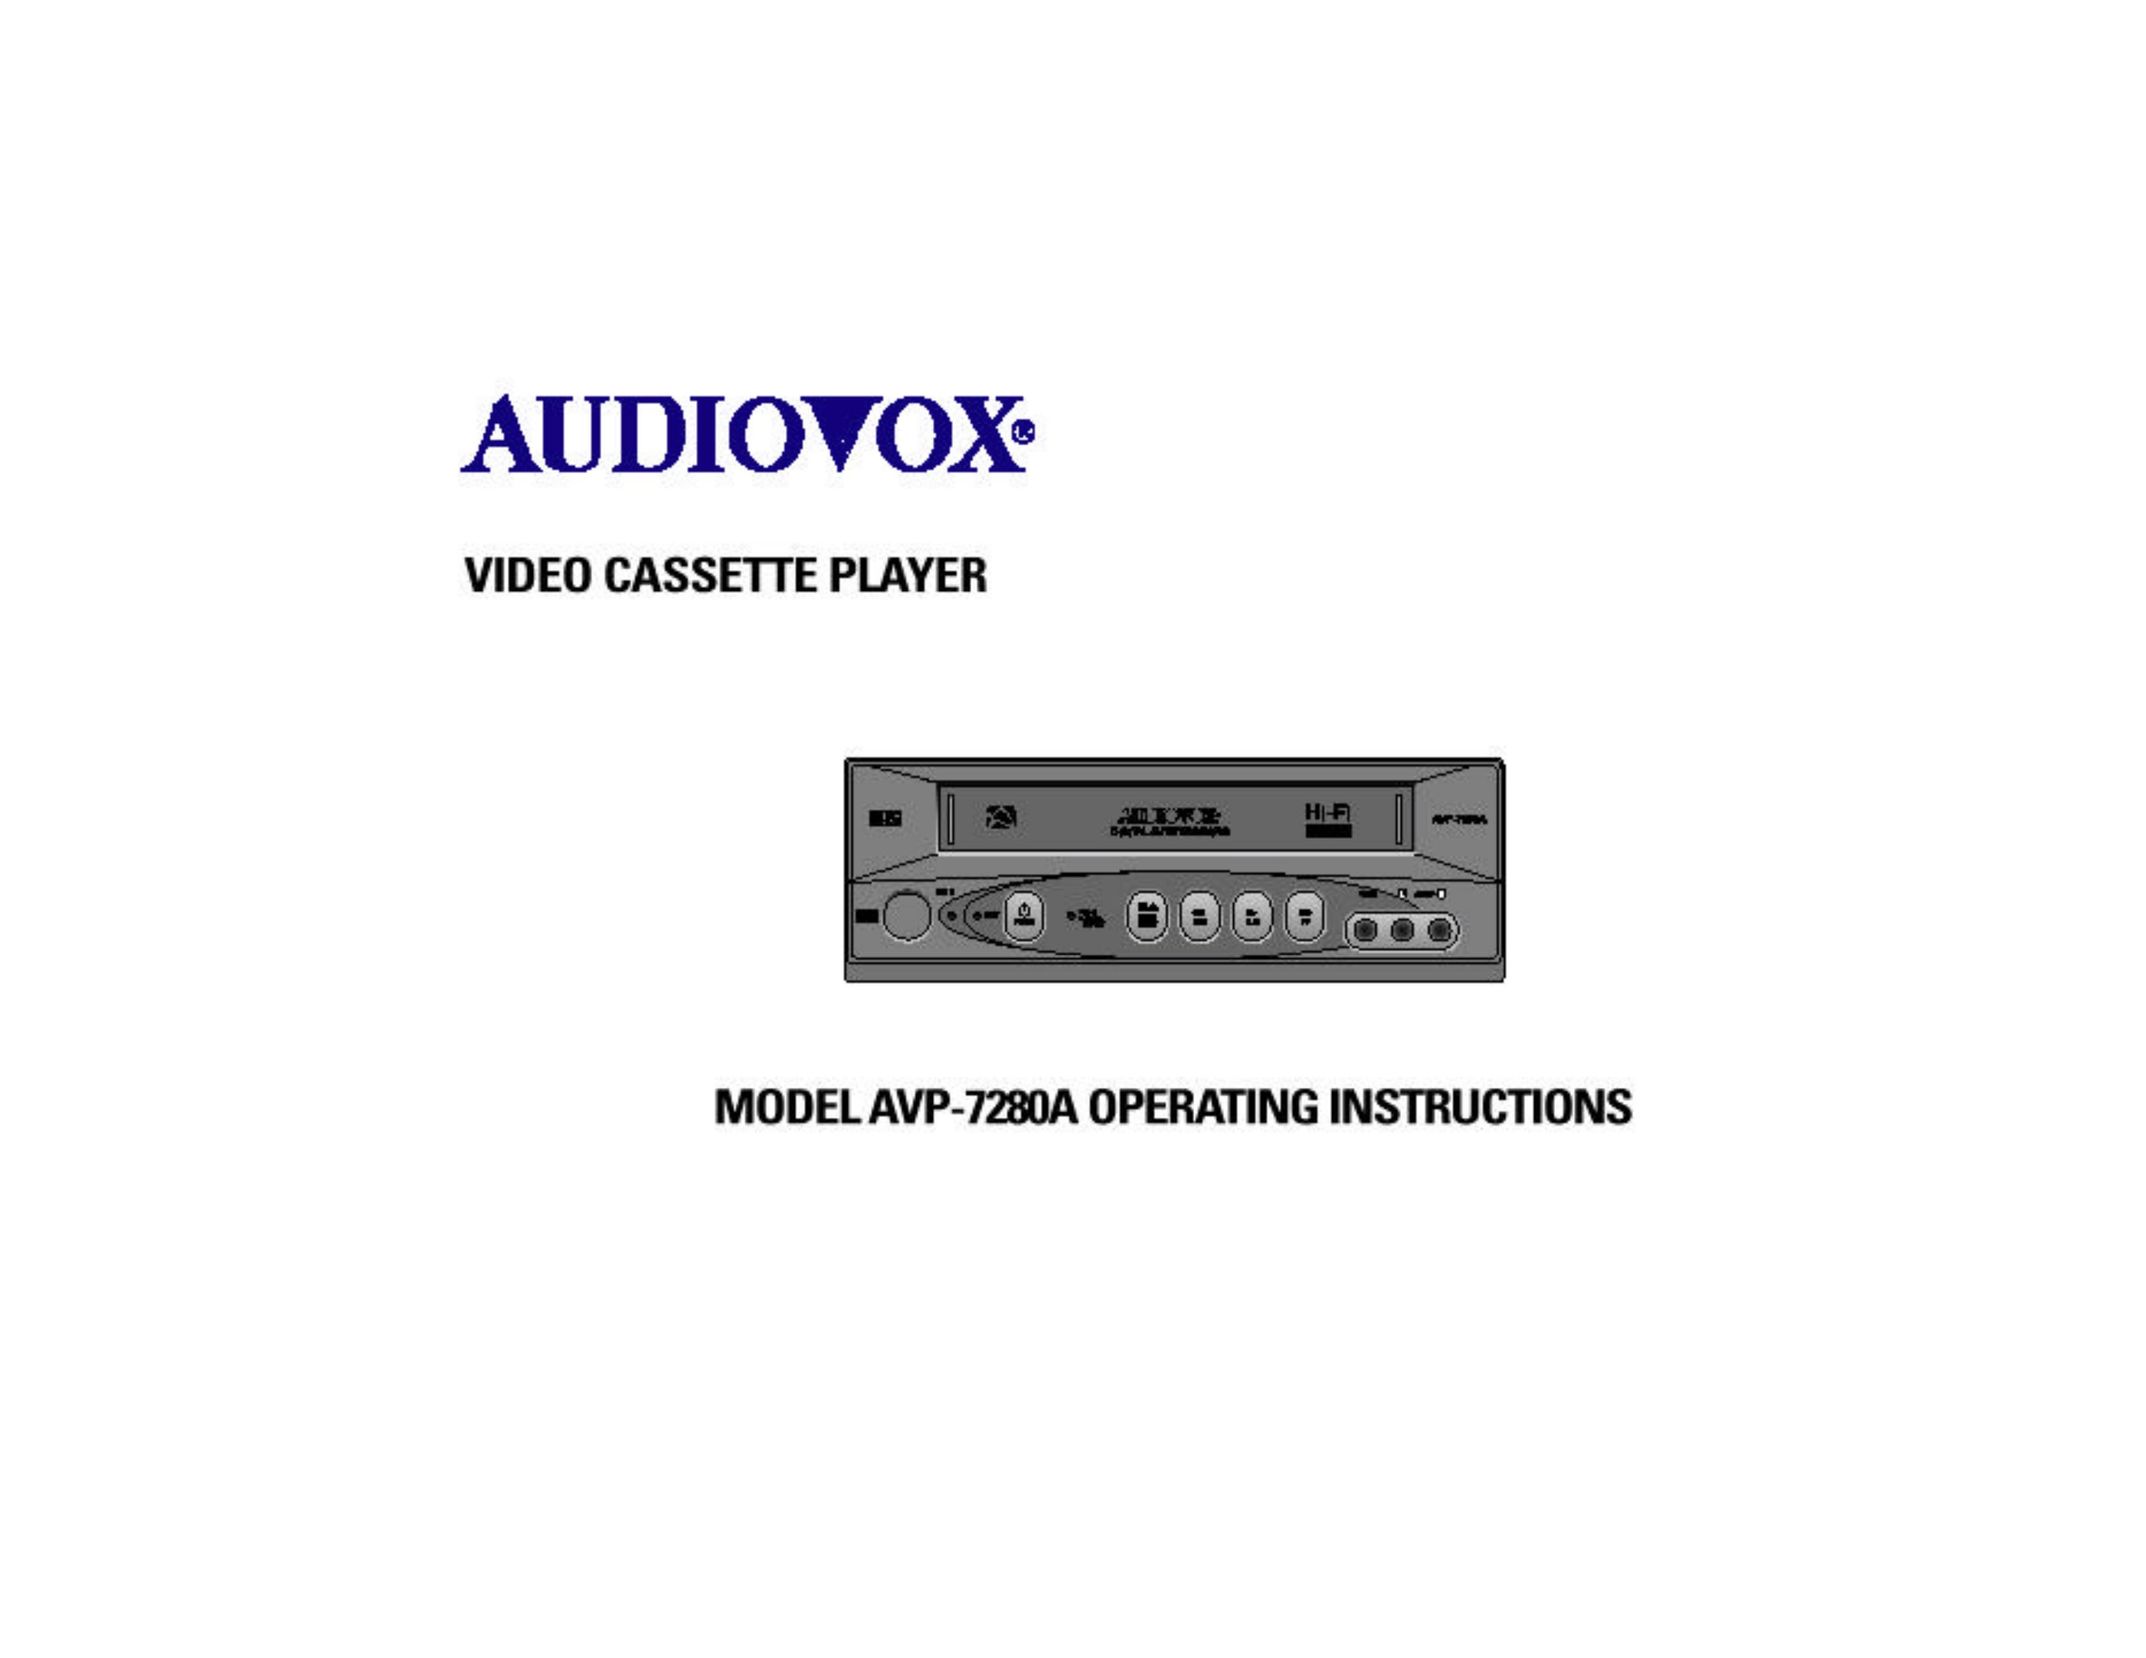 Audiovox AVP-7280A VCR User Manual